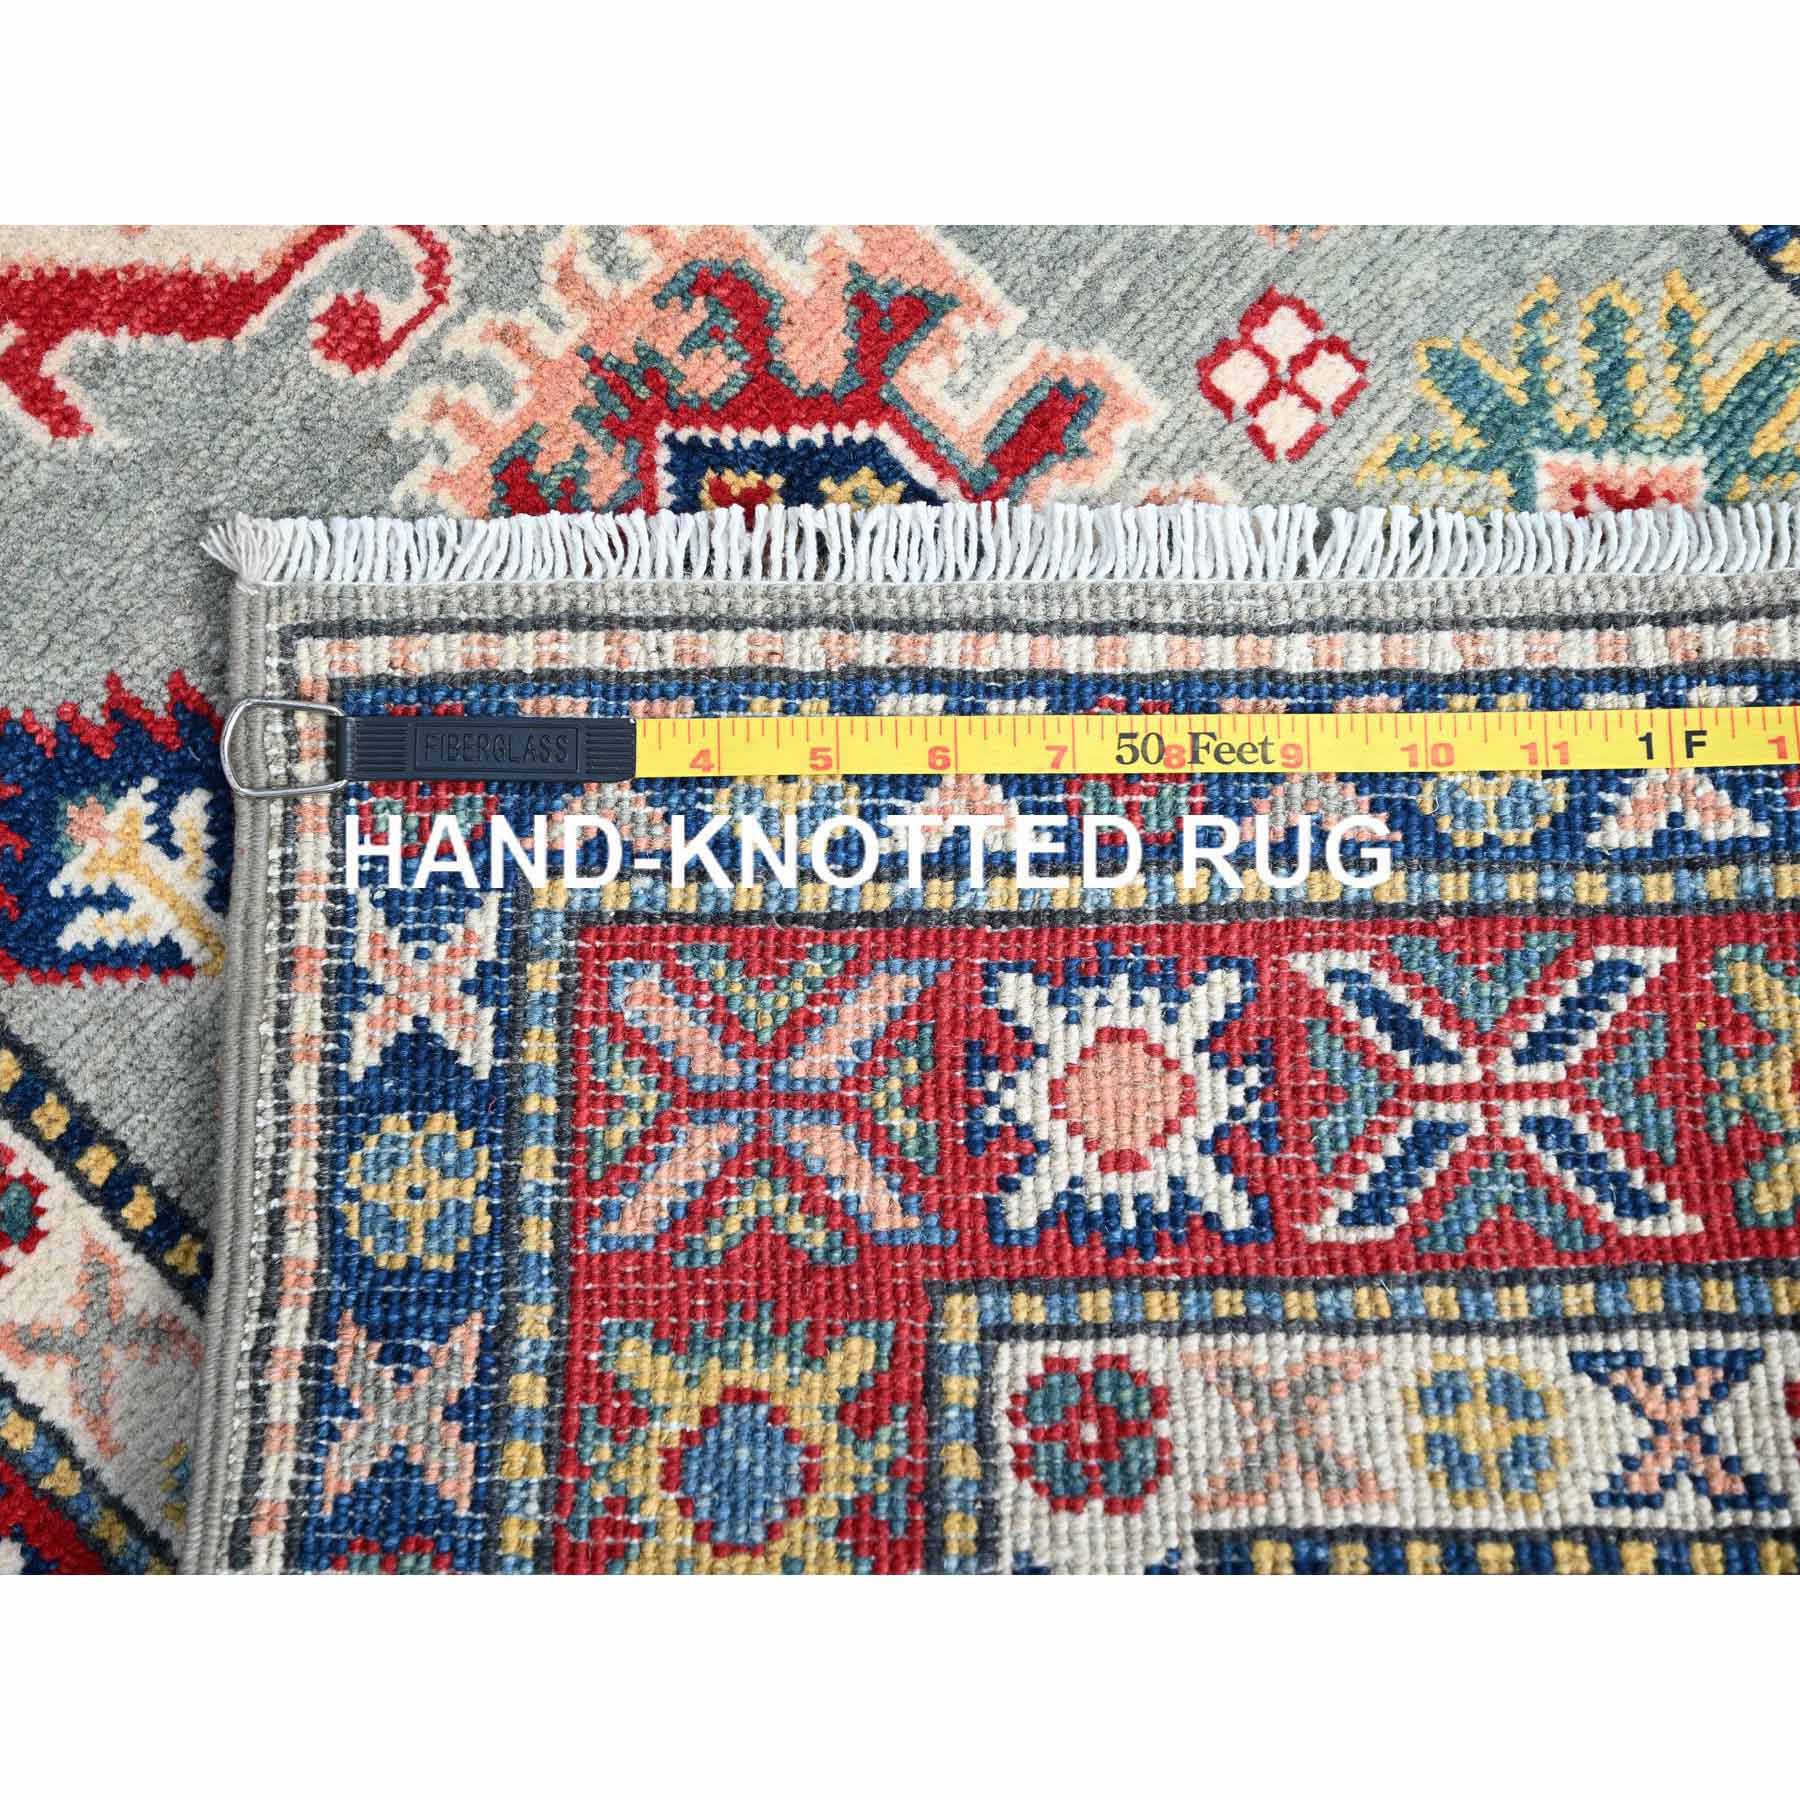 Kazak-Hand-Knotted-Rug-434175